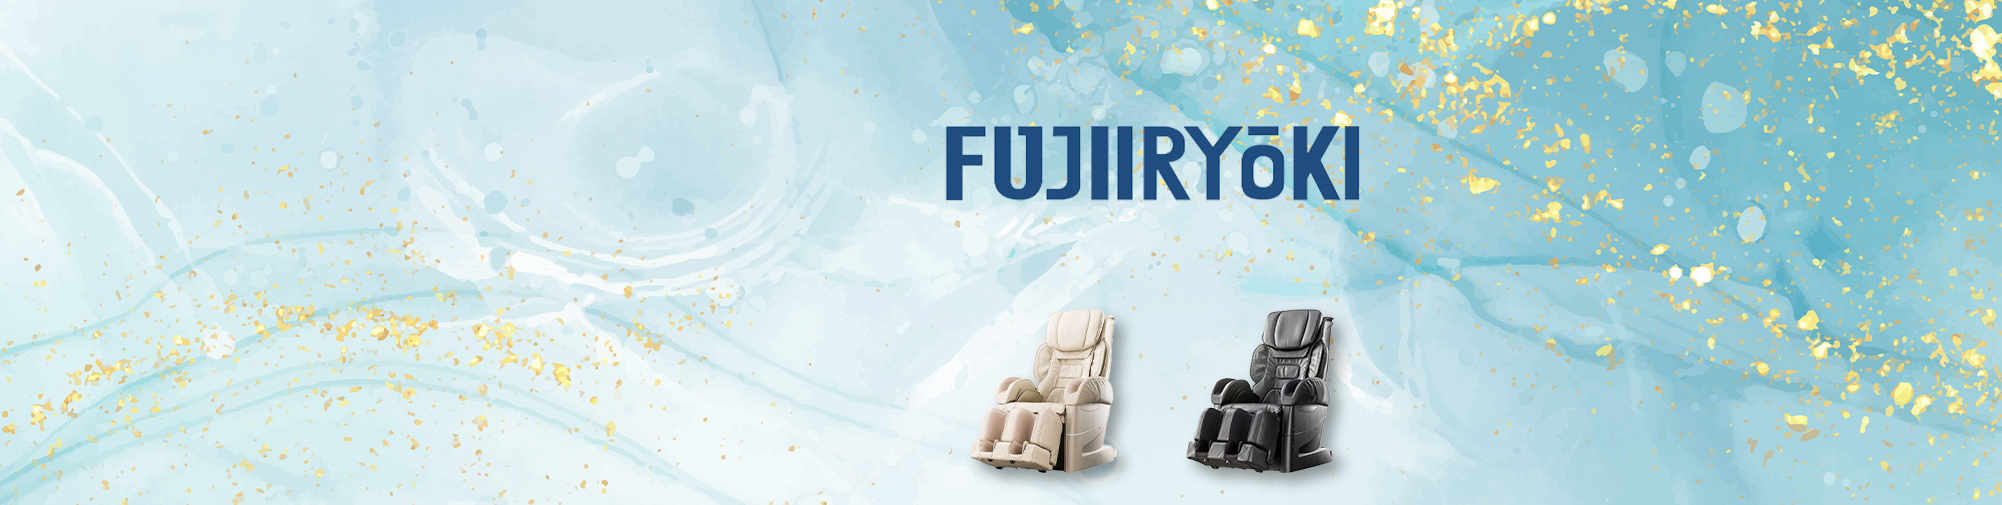 Fujiiryoki - The history of massage chairs | Massage Chair World